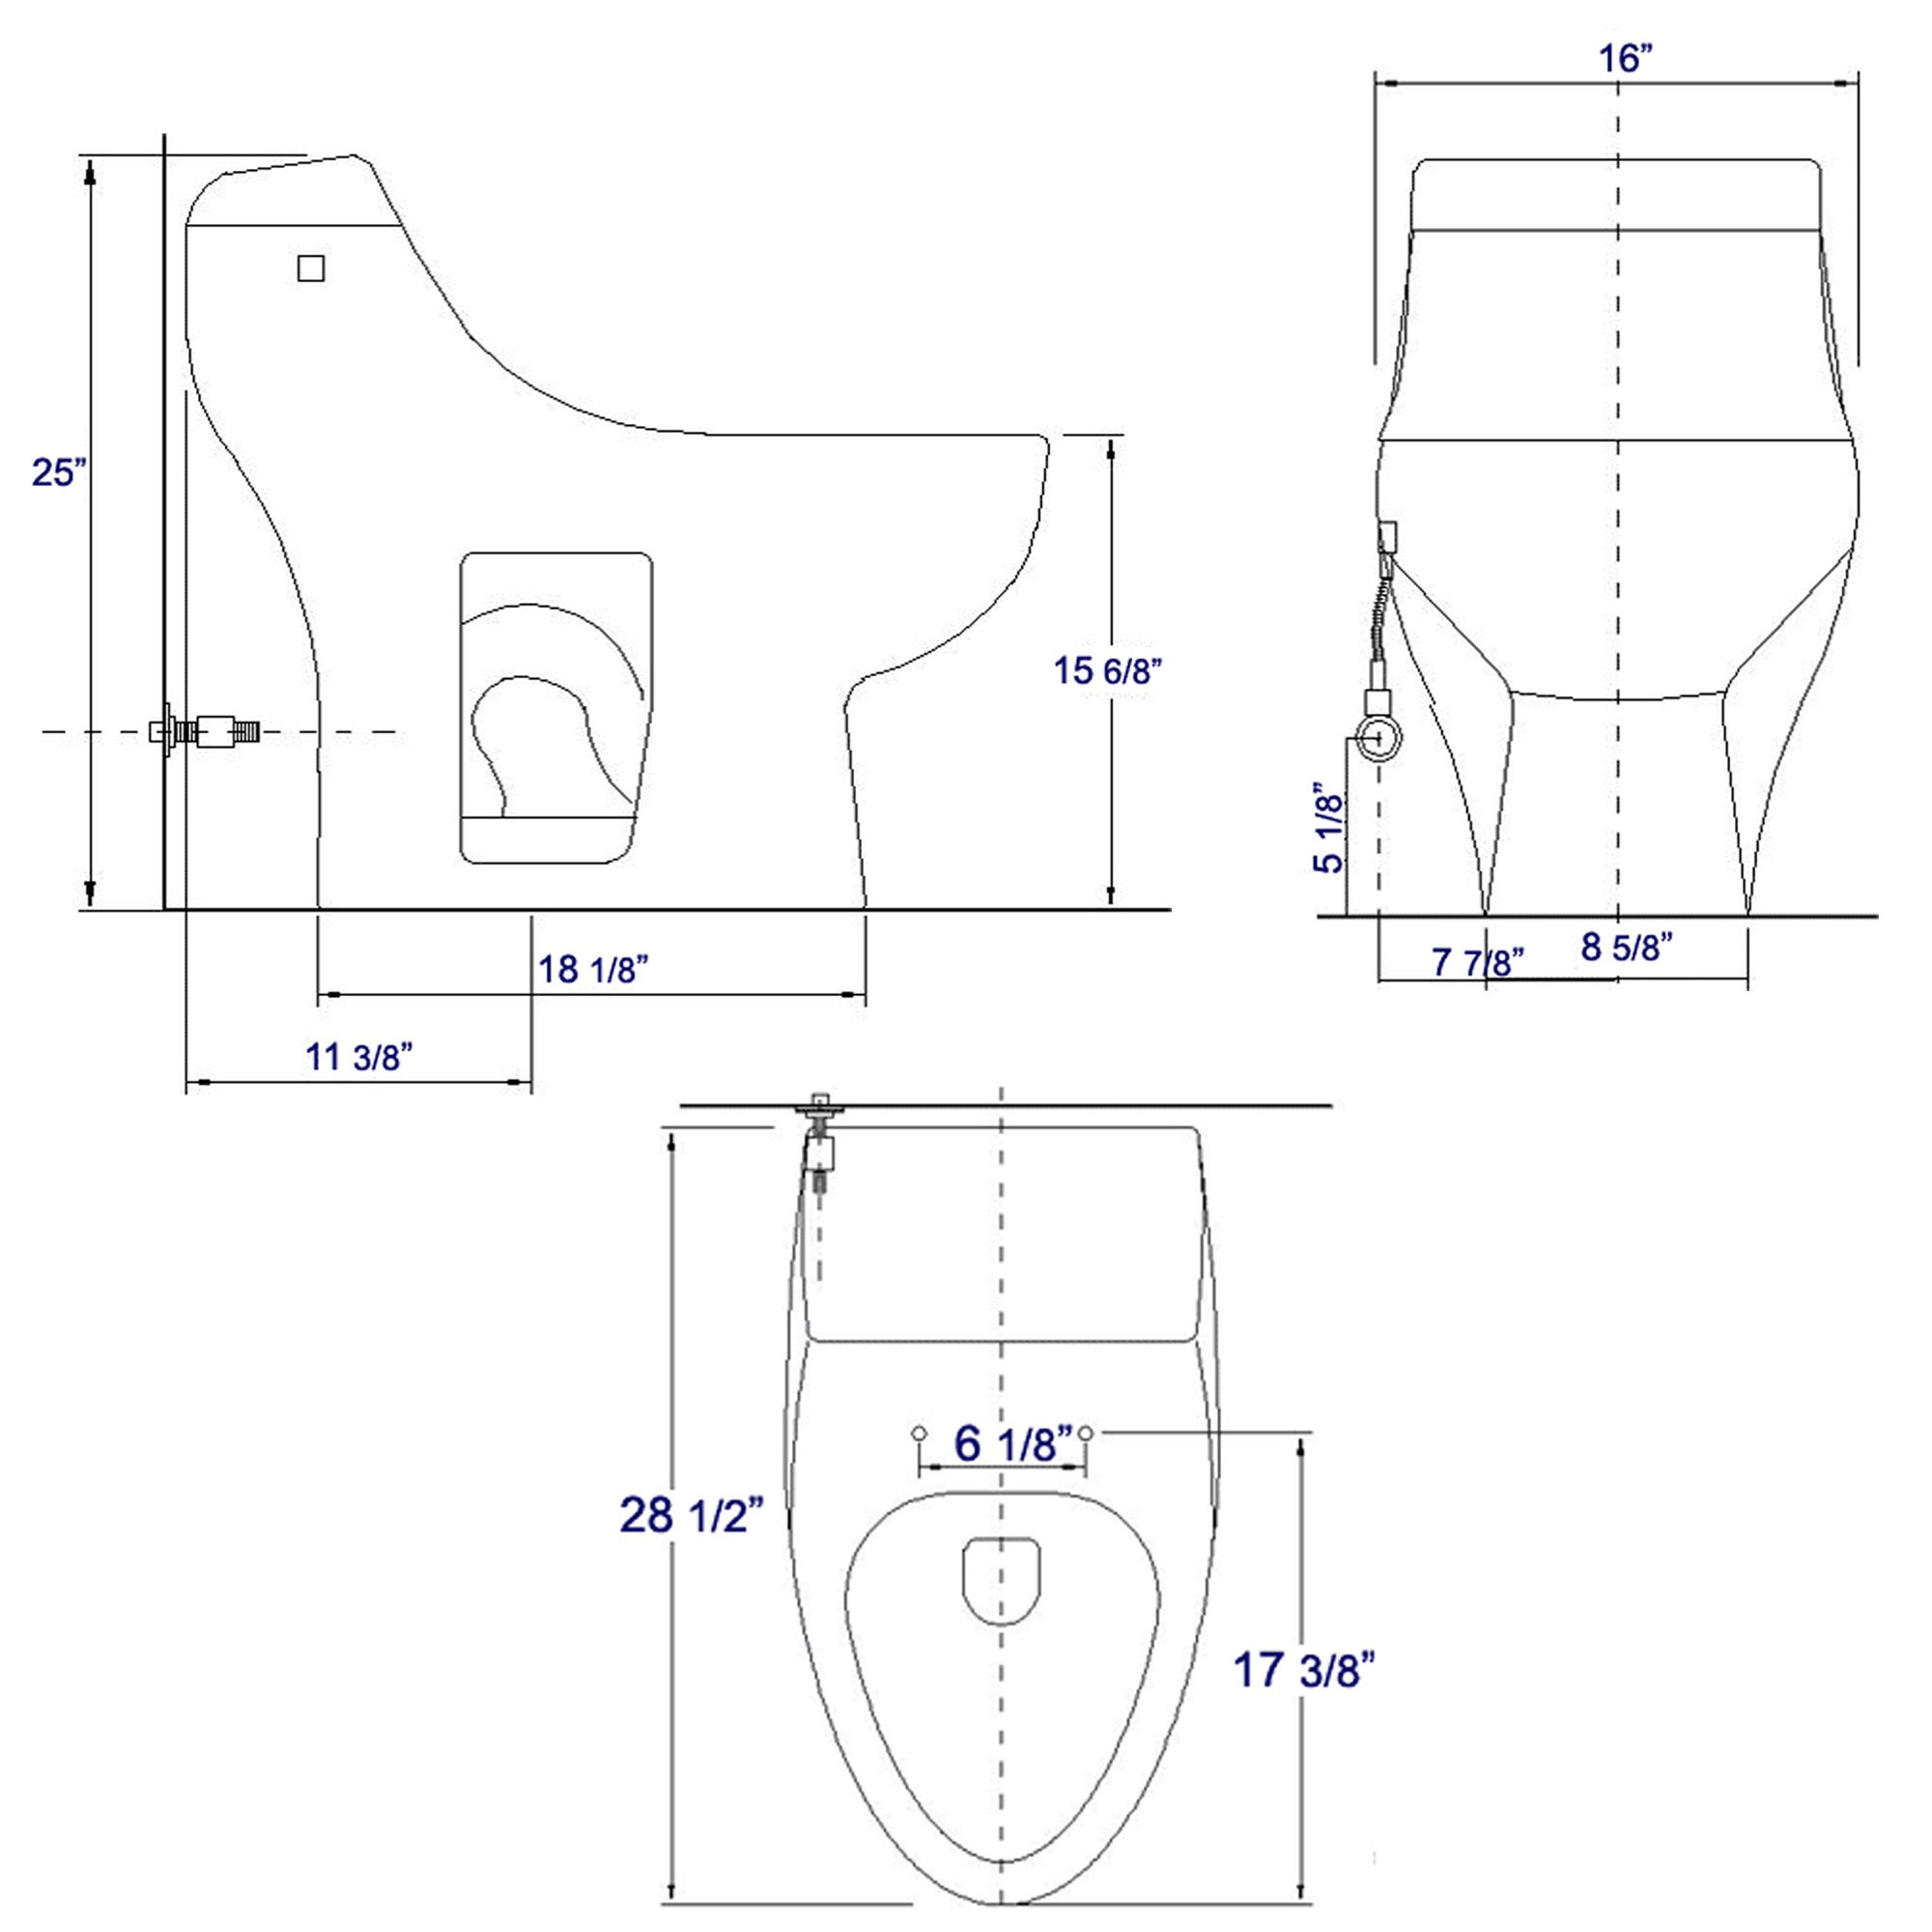 EAGO TB108 Eco-Friendly Toilet Modern-Style w/ High Efficiency Low Flush